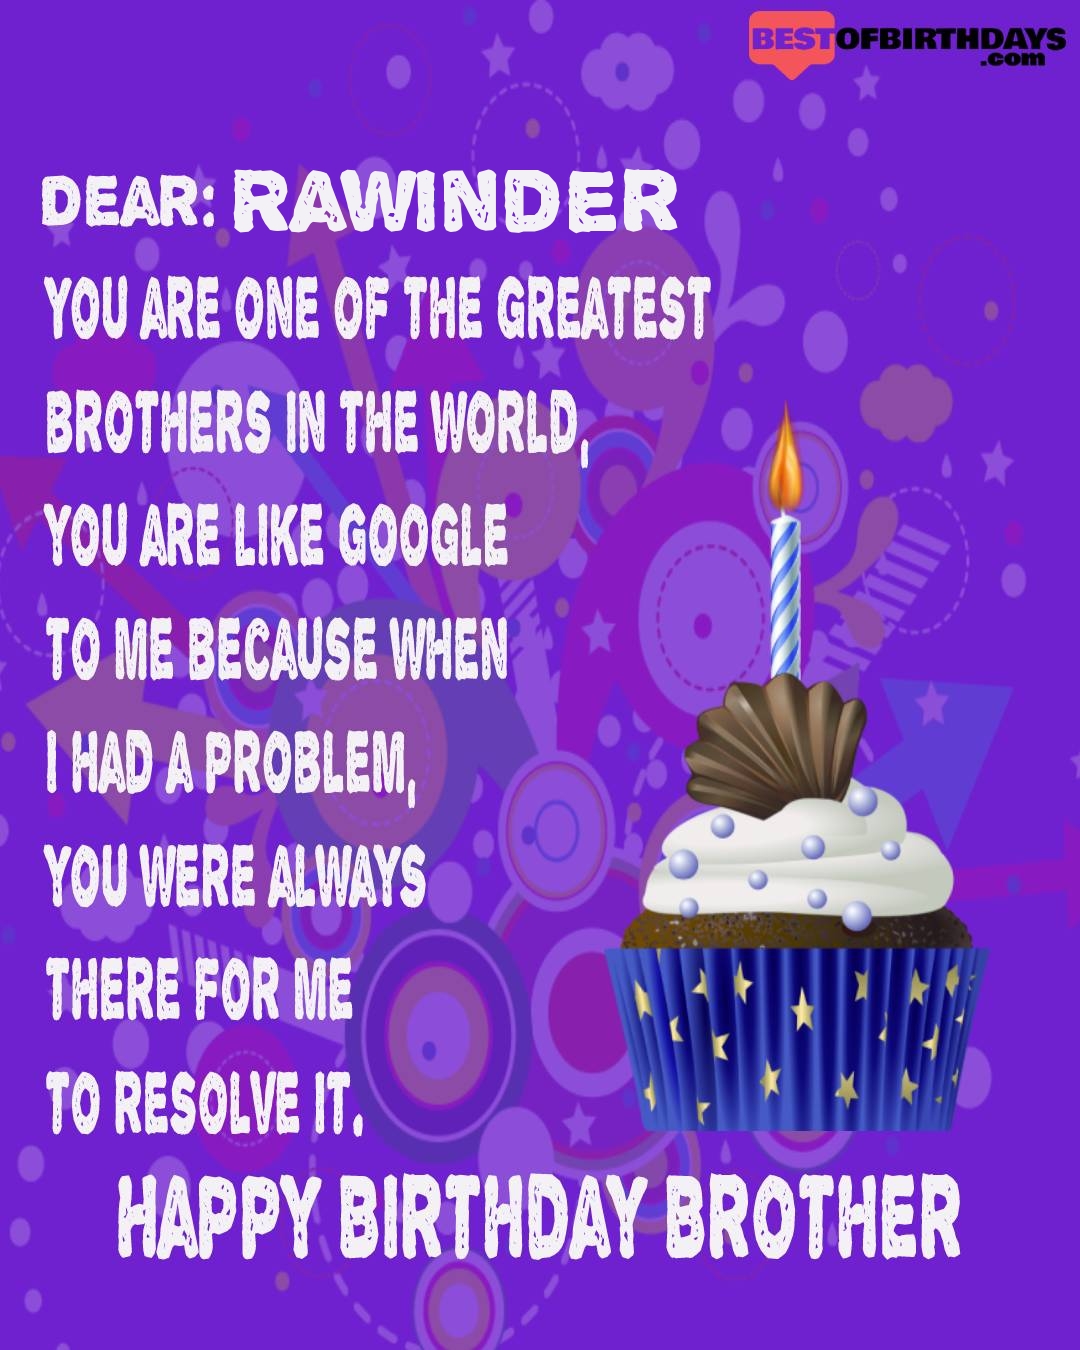 Happy birthday rawinder bhai brother bro